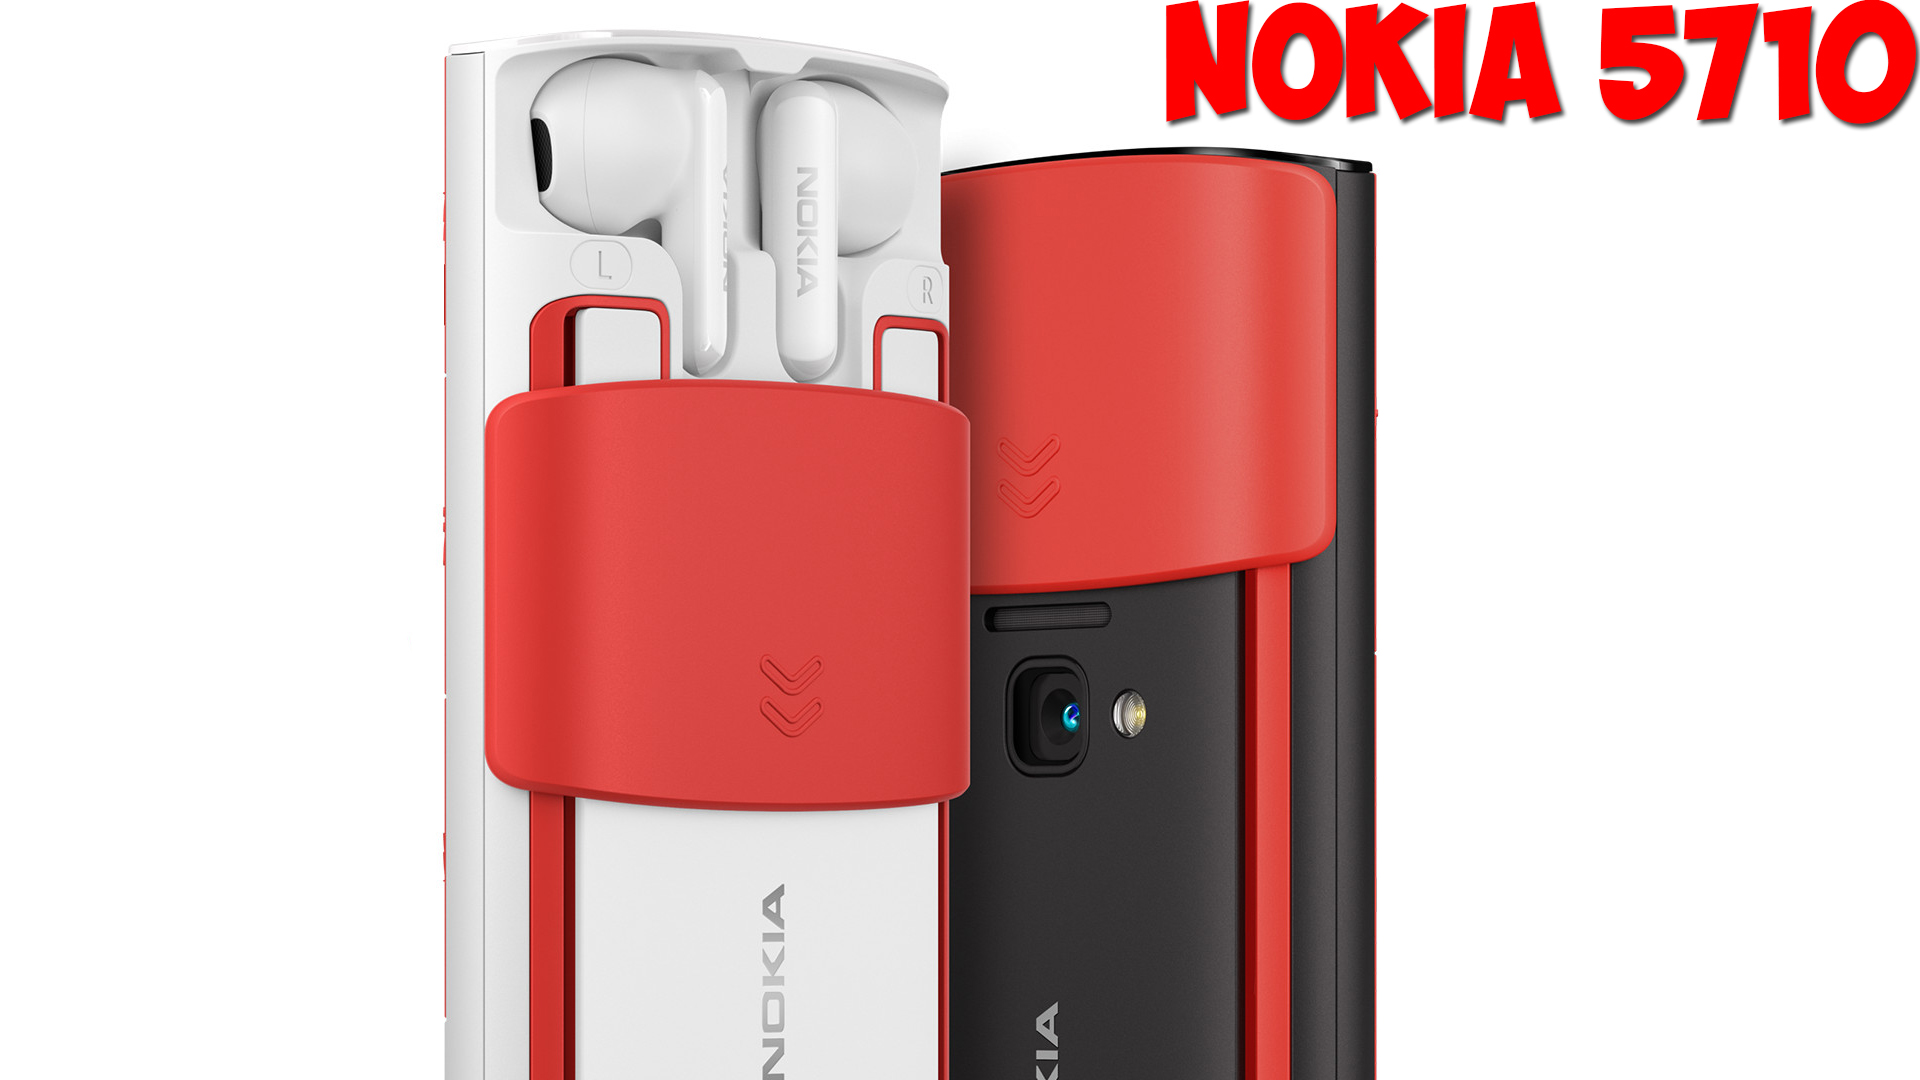 5710 xpress audio. Нокия 5710 Express Audio. Nokia 5710 Xpress Audio. Nokia 5710 Xpress Audio характеристики. Нокиа 5710 XPRESSMUSIC 2022.